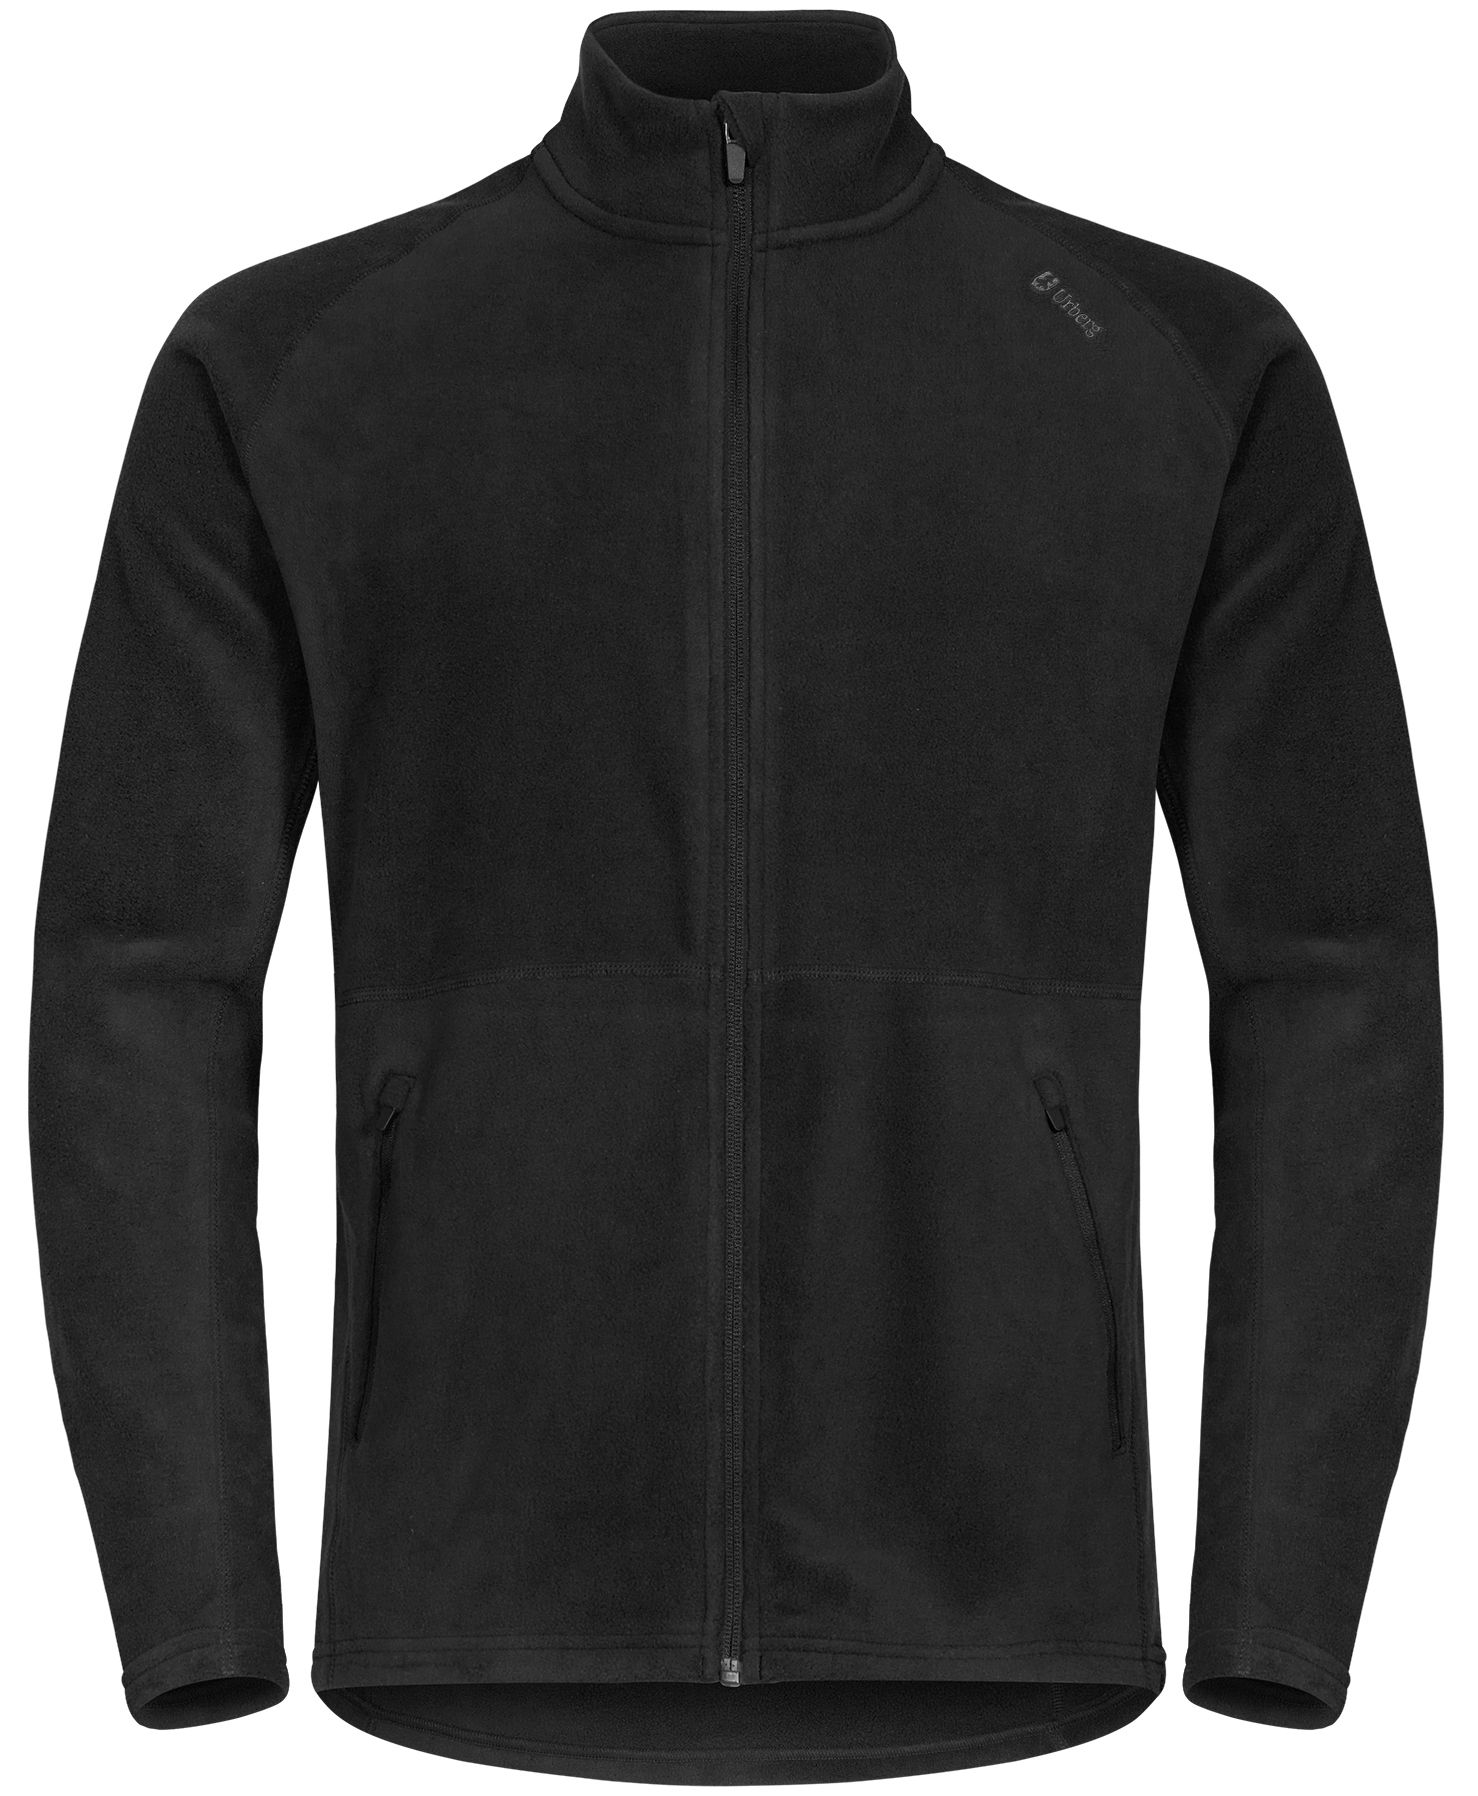 Urberg Men's Fleece Jacket Black Beauty